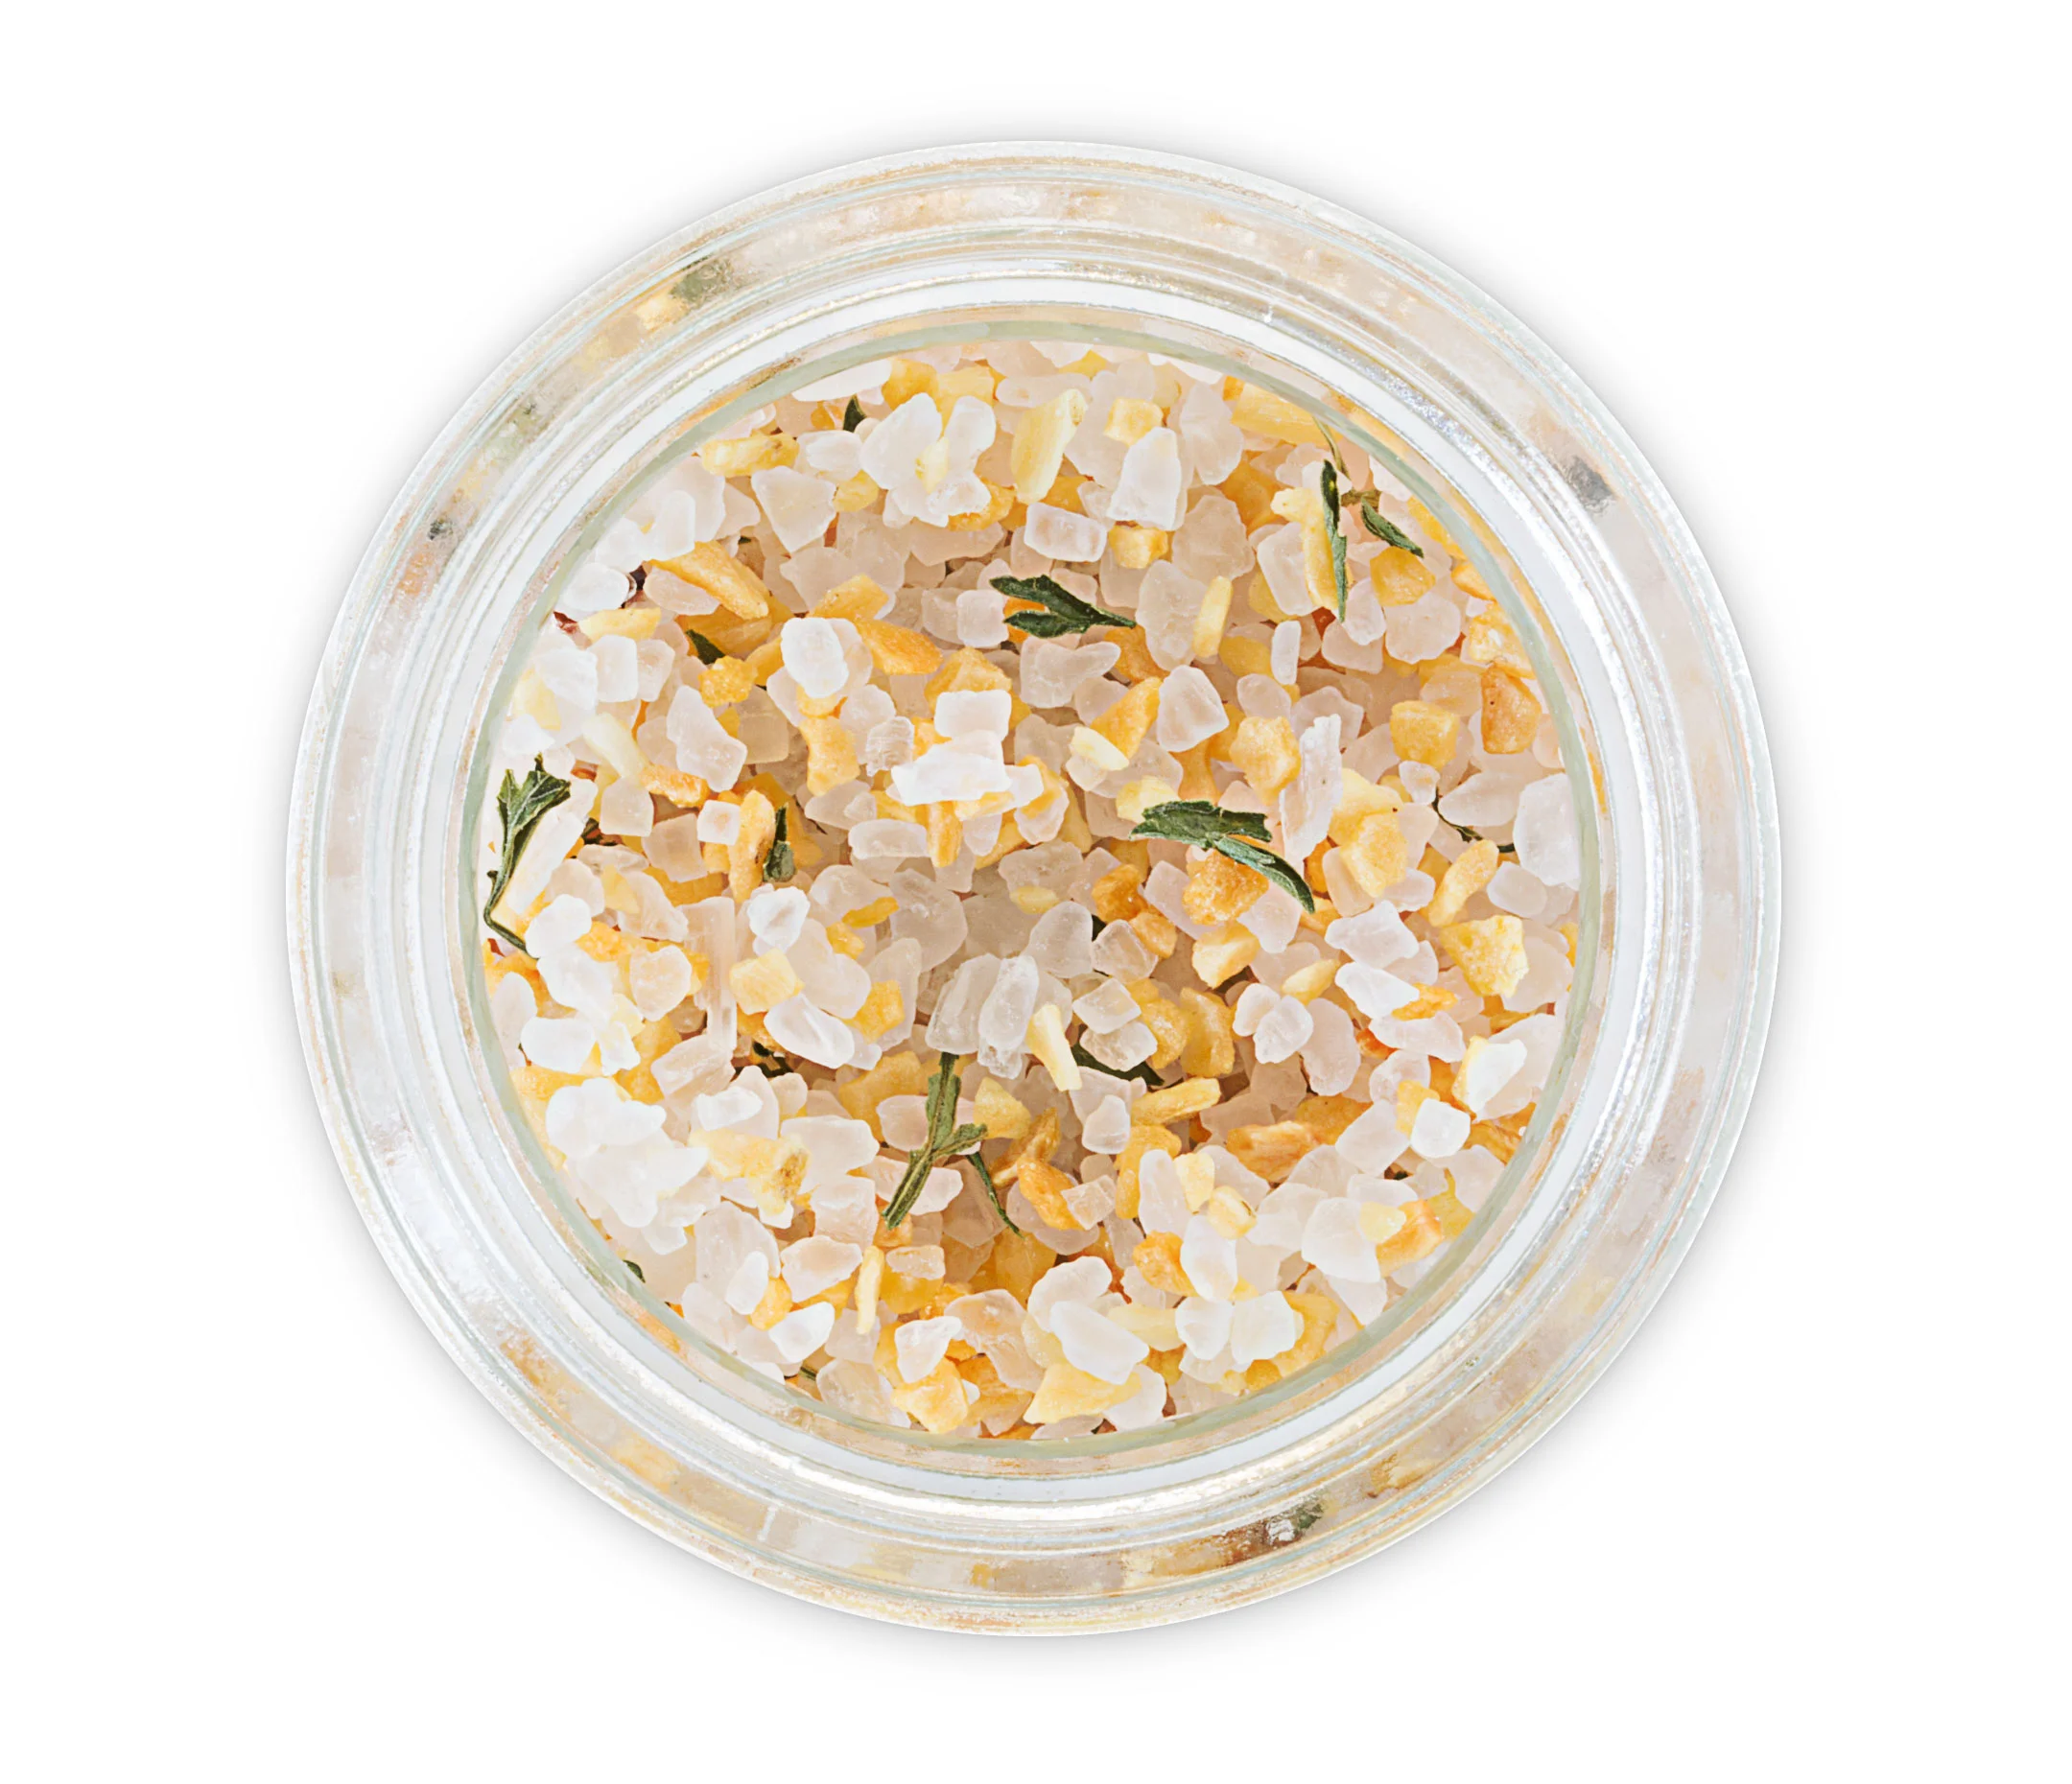 Herbed Garlic Sea Salt Blend (Refill)